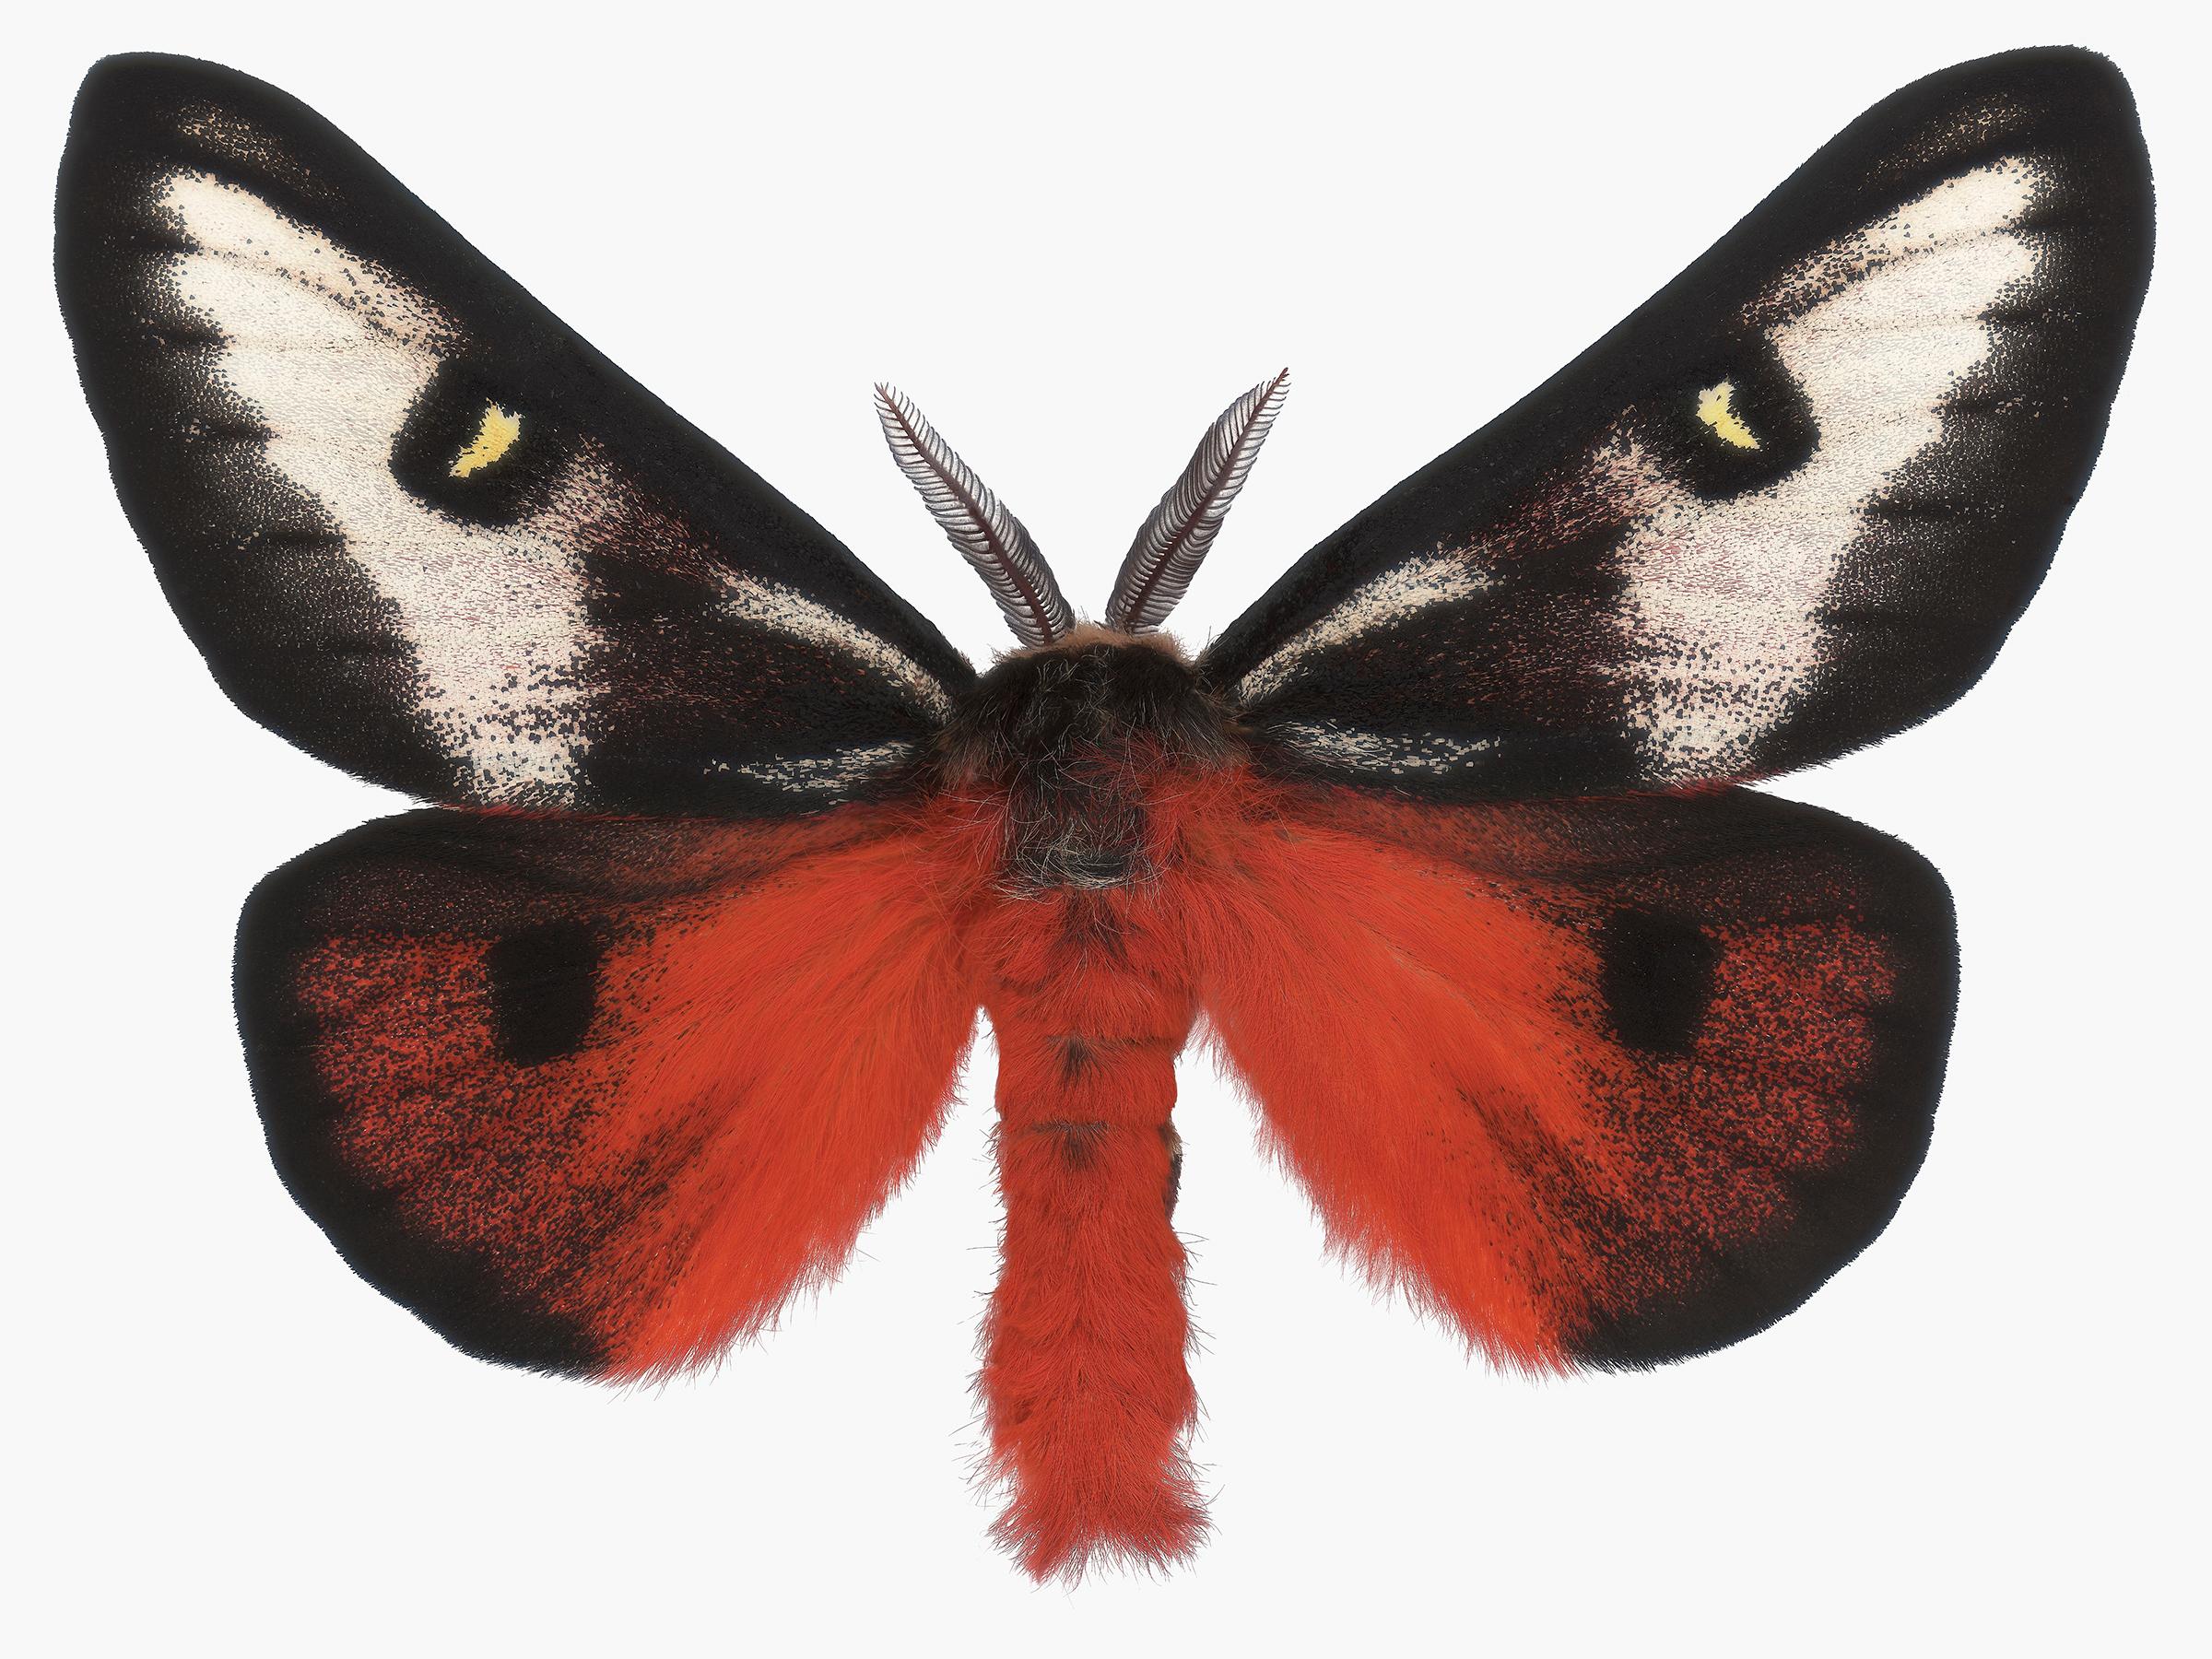 Joseph Scheer Color Photograph – Hemileuca Electra, rot-orange, schwarz, gelb-weiß Motte Insekt Nature Photograph